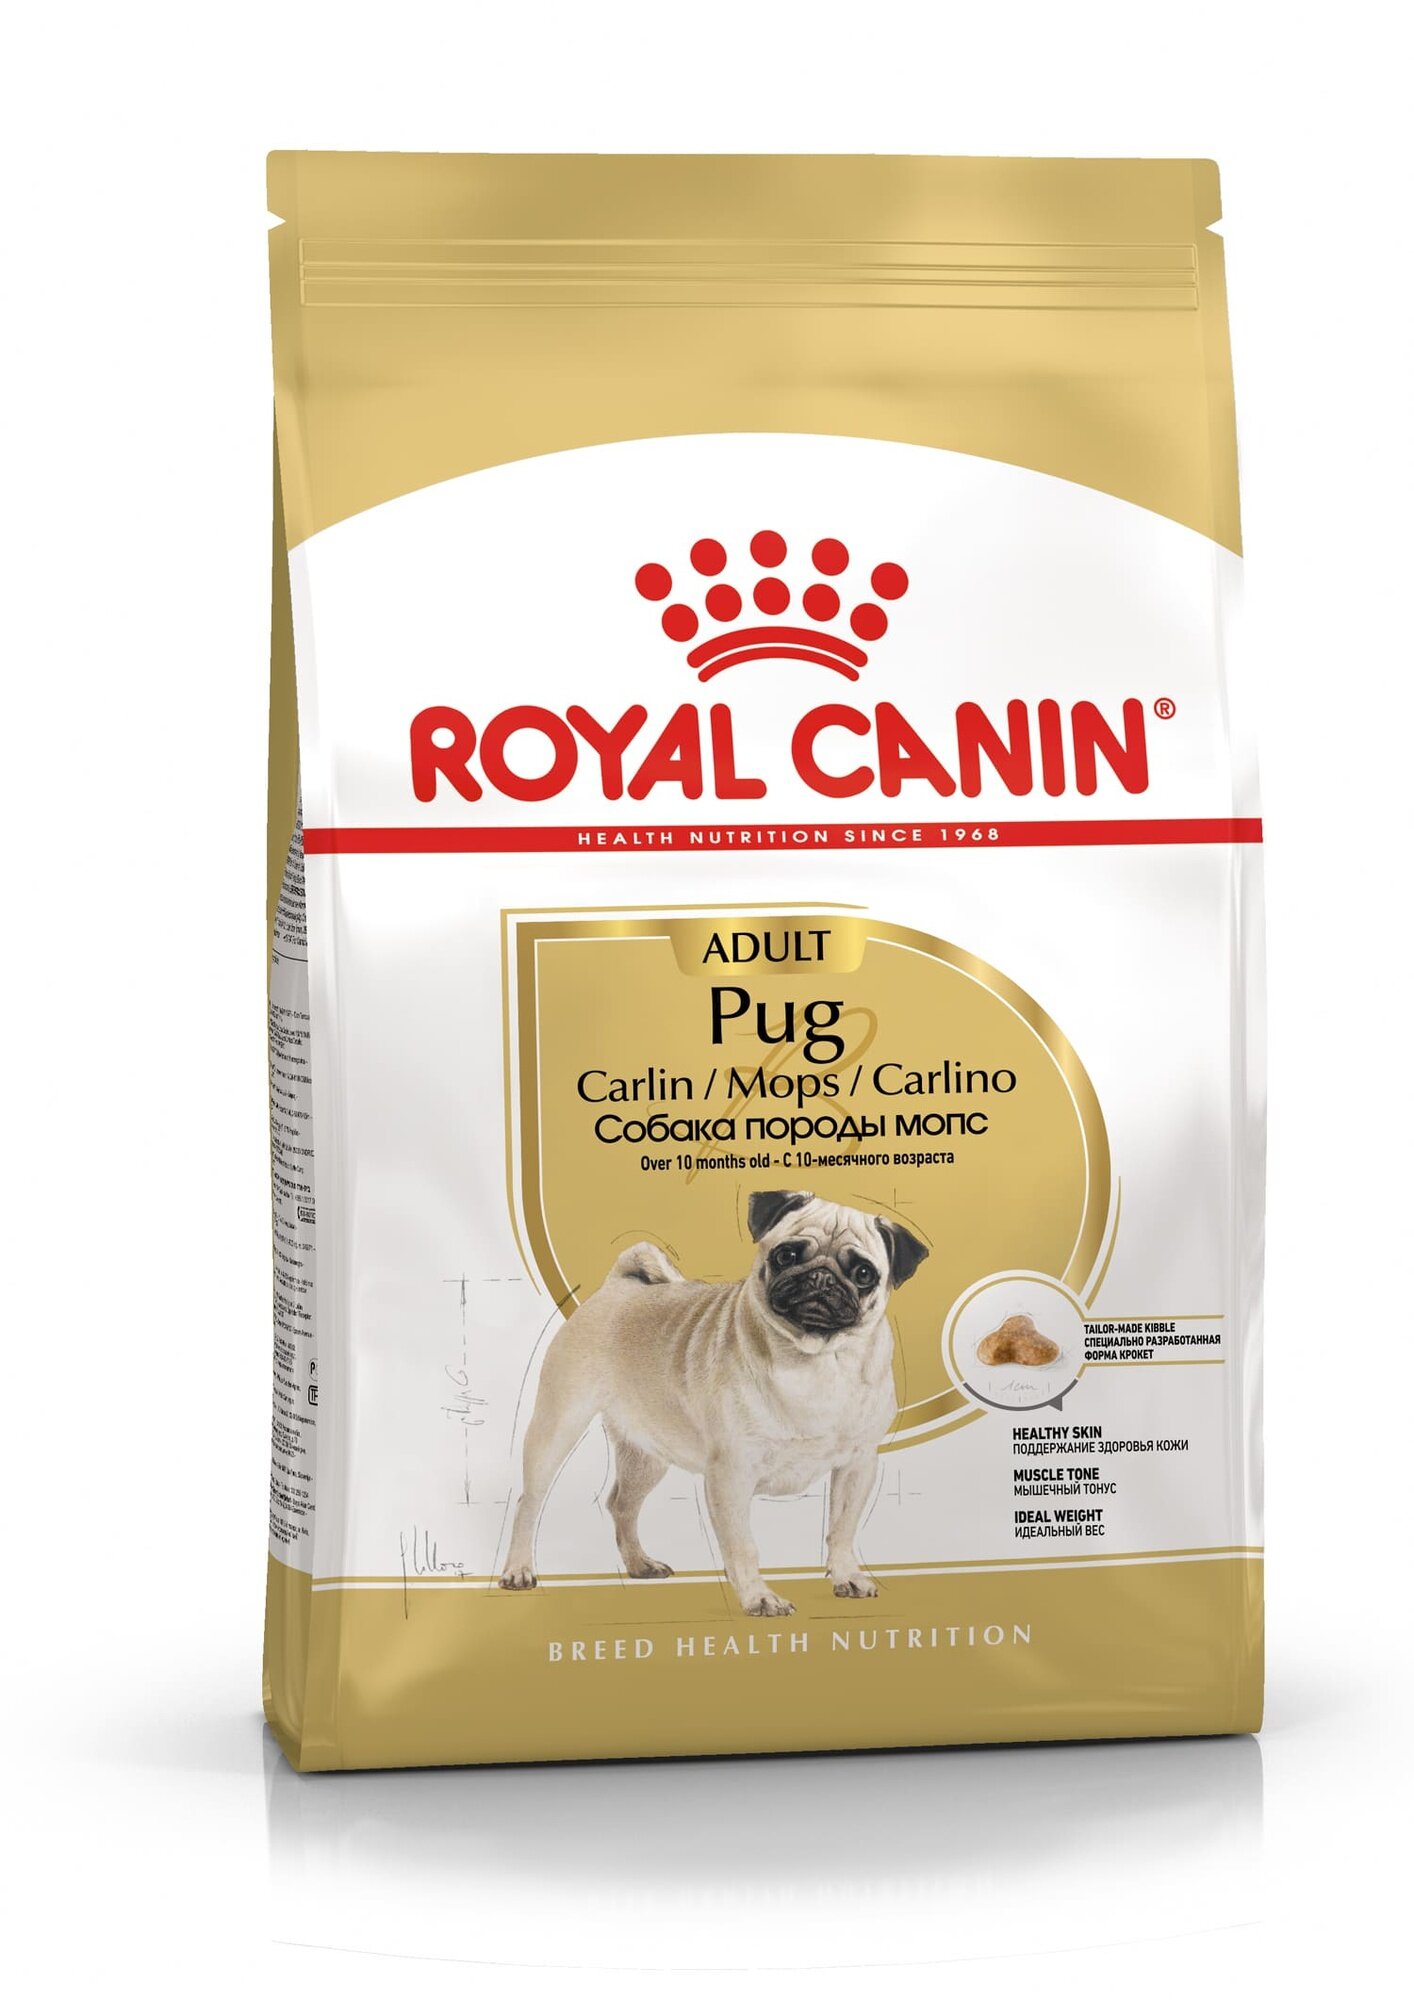 Сухой корм Royal Canin для взрослого мопса с 10 месяцев, 1.5кг